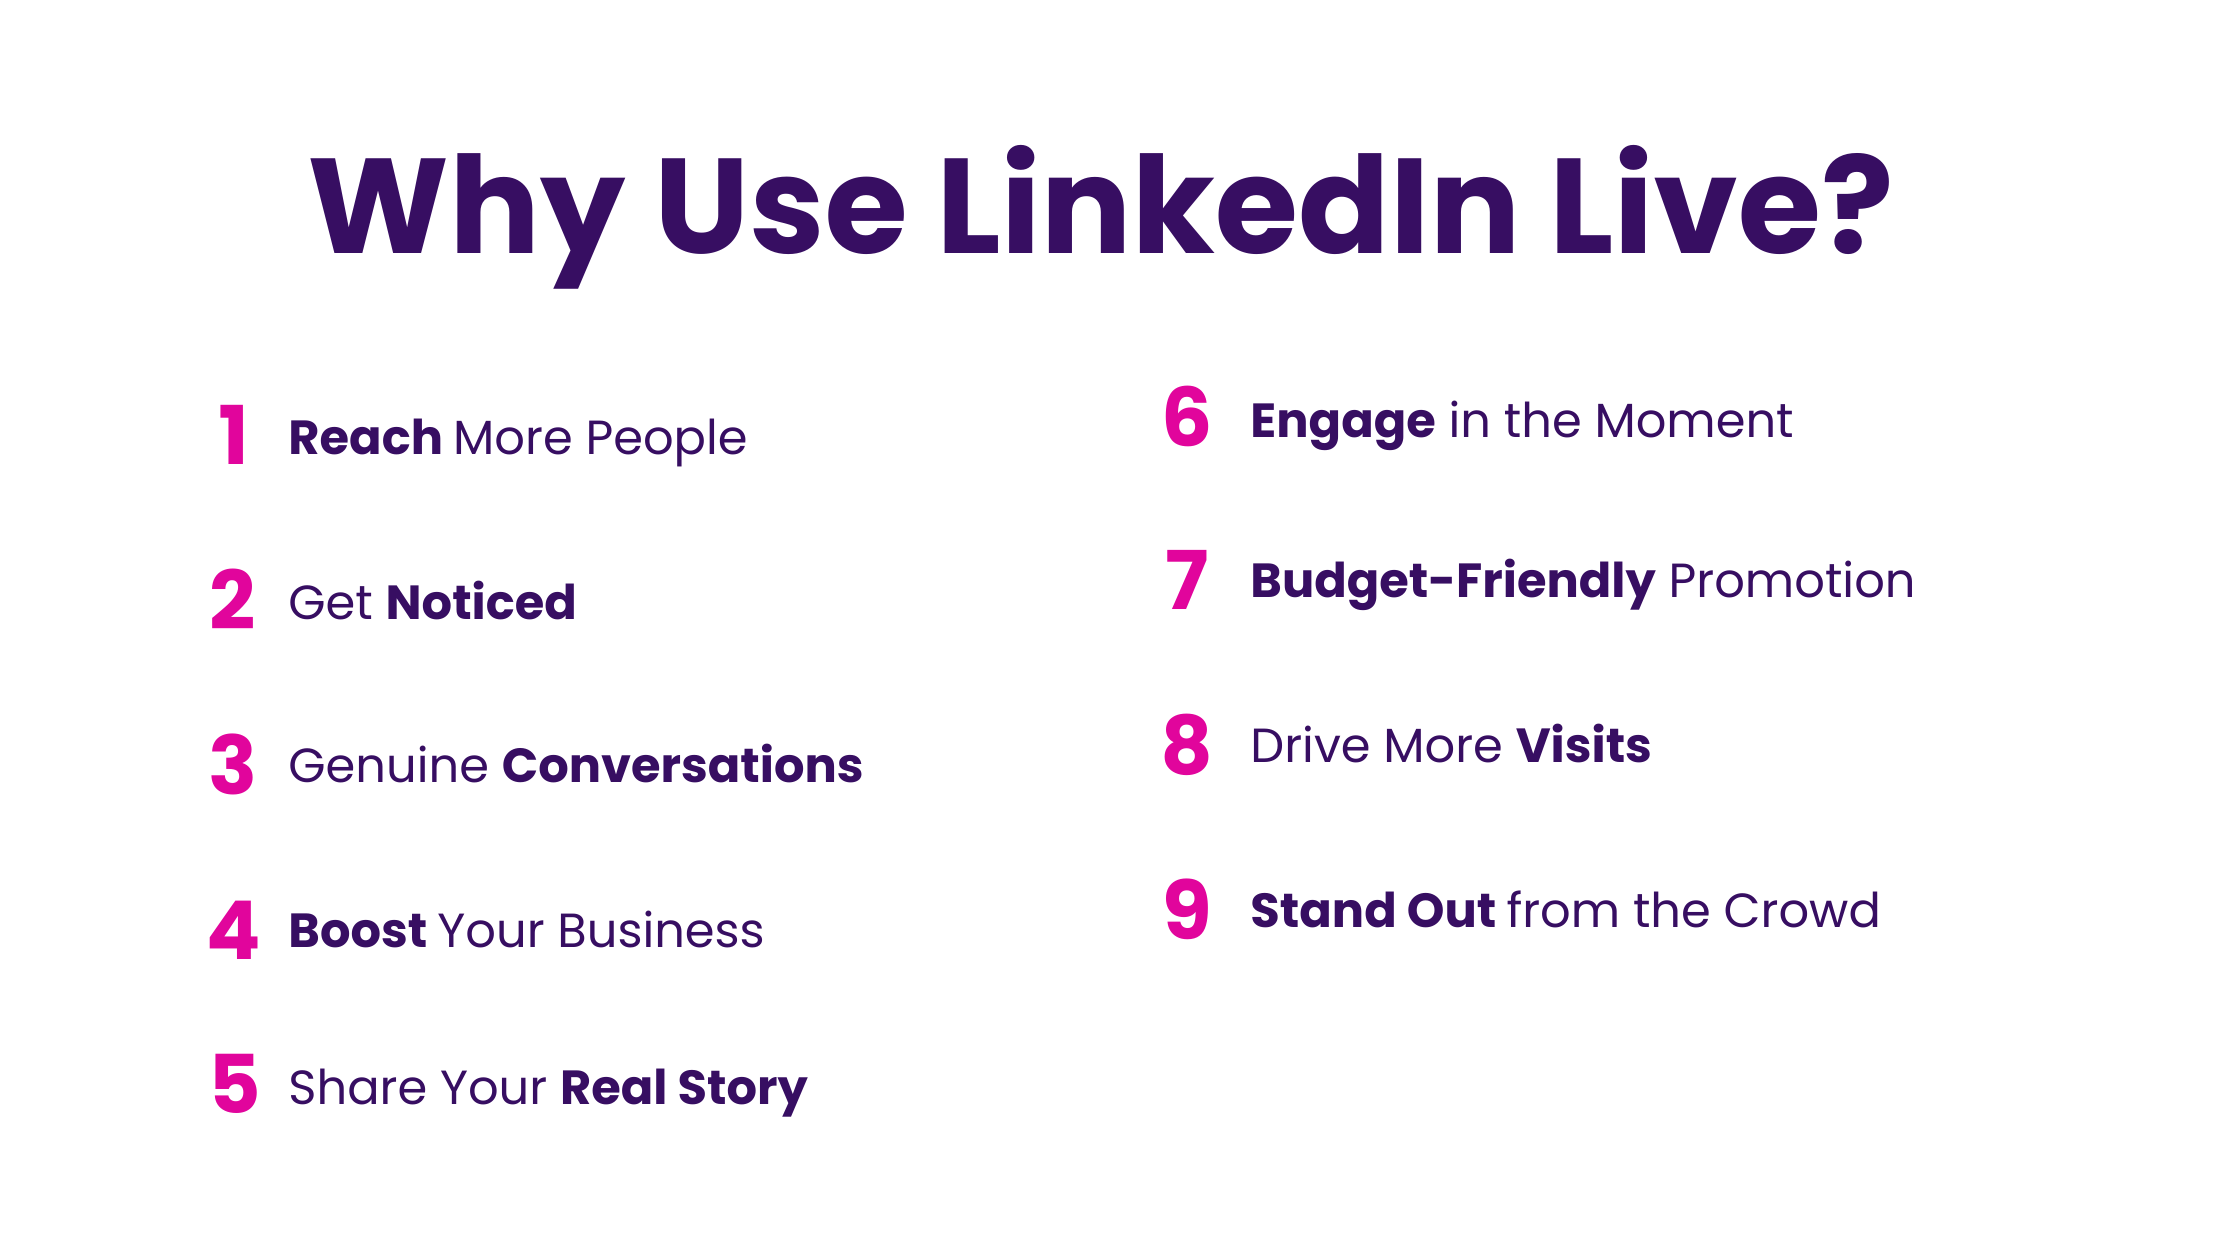 Why Use LinkedIn Live